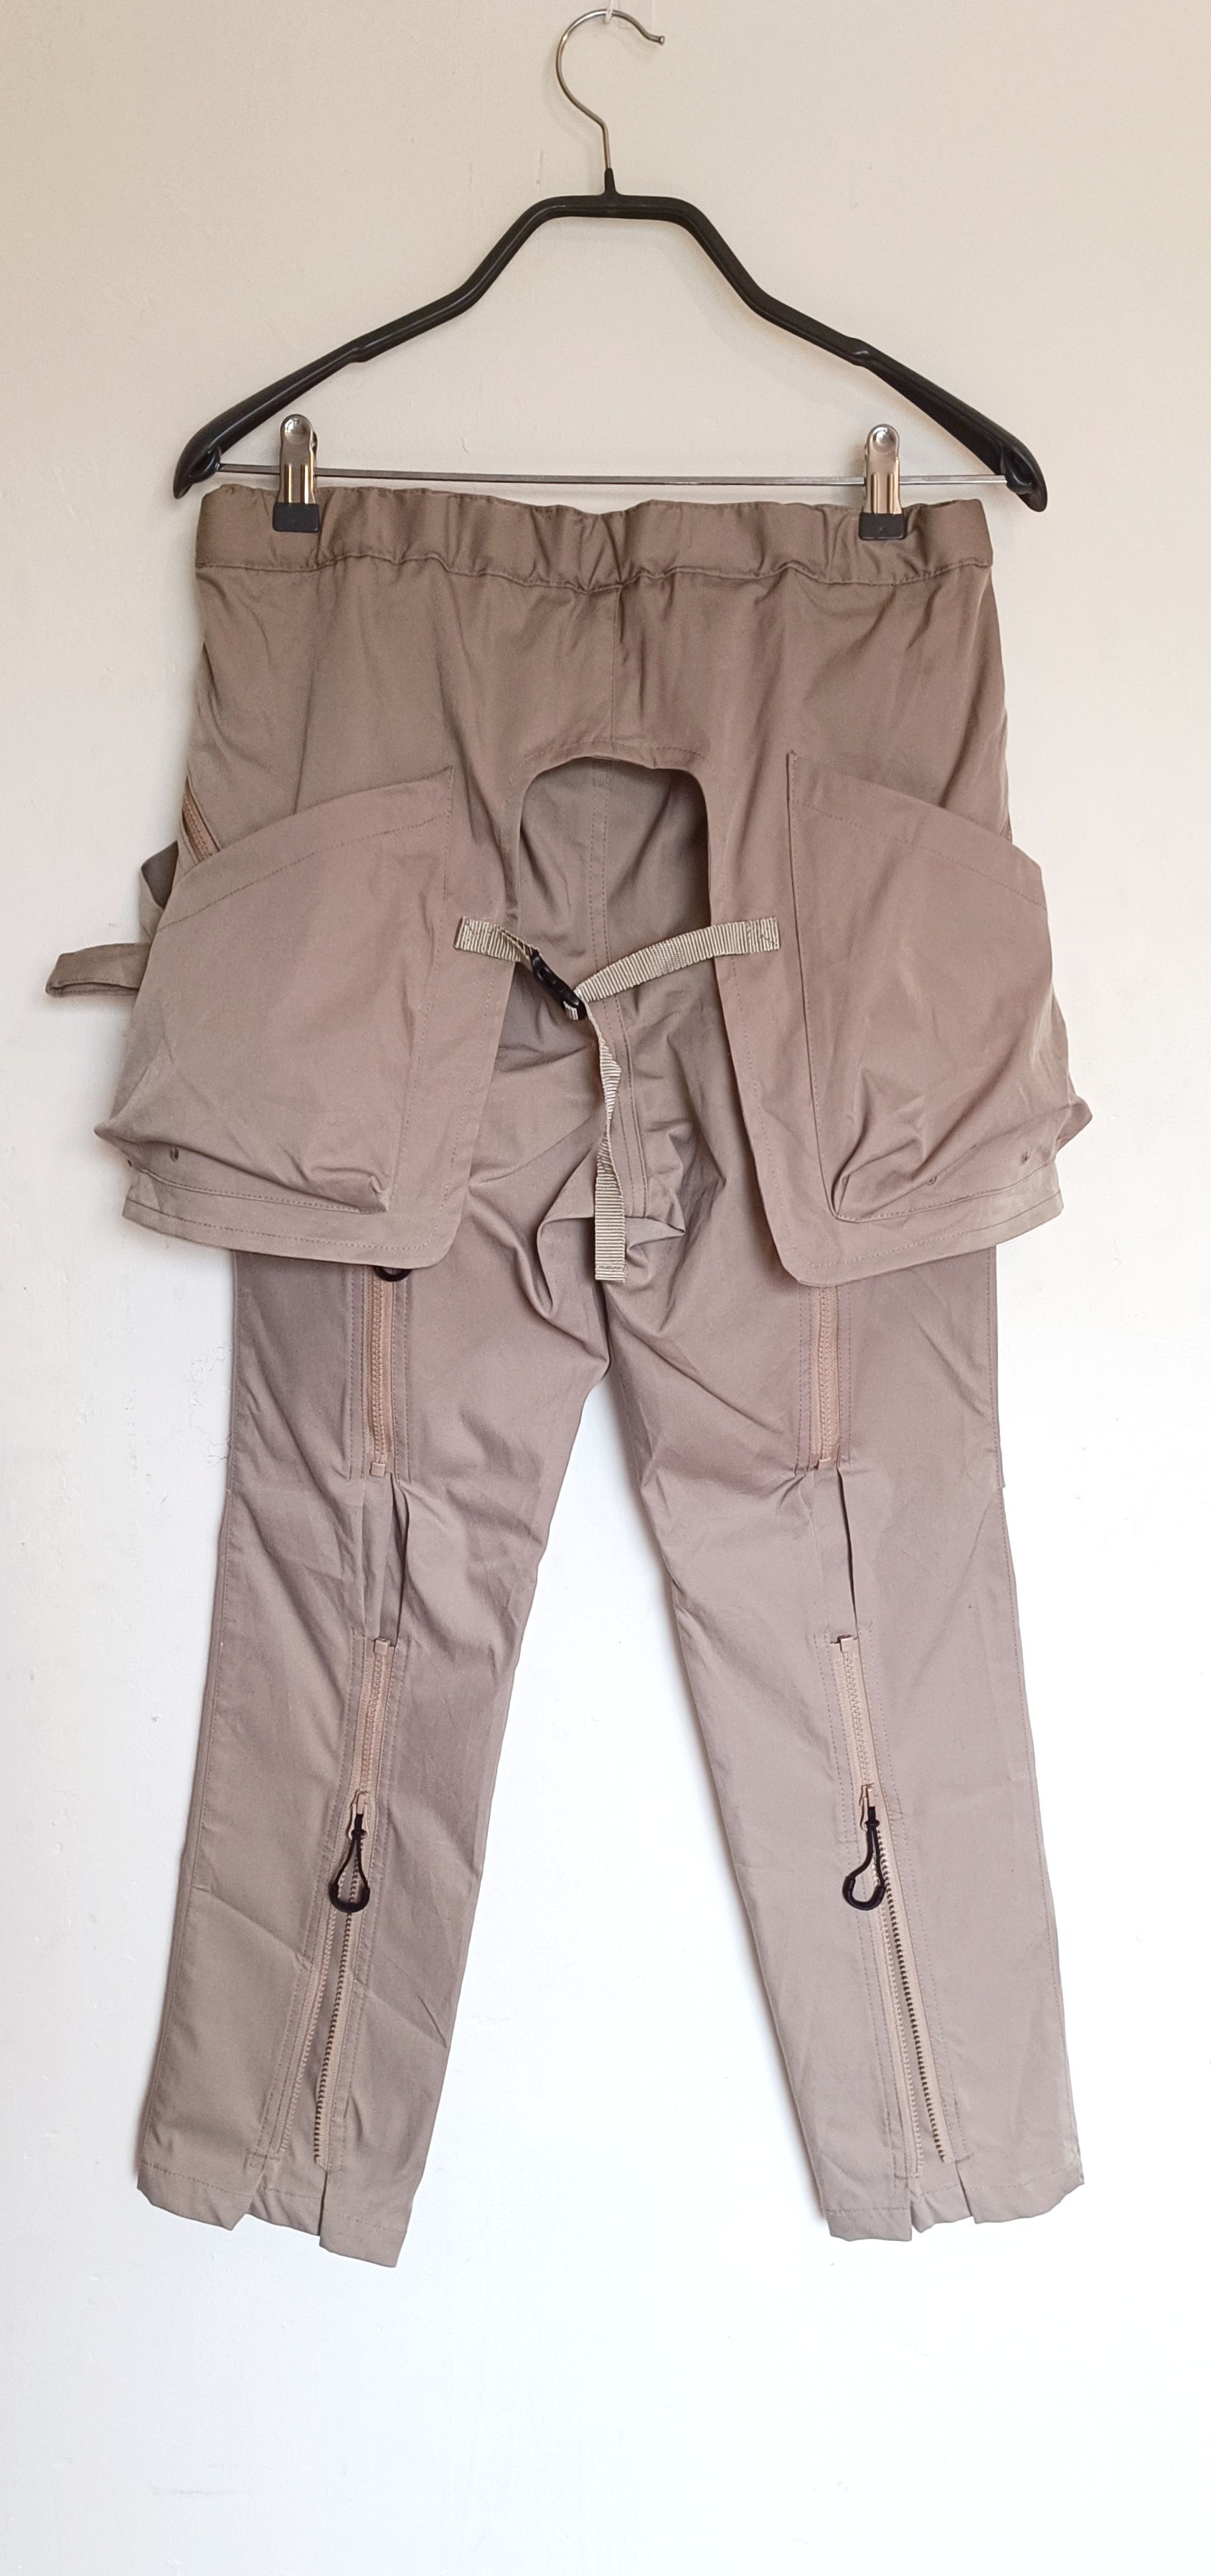 Avant Garde - CMF Comfy Outdoor Garment Kiltic Bondage Pants - 4